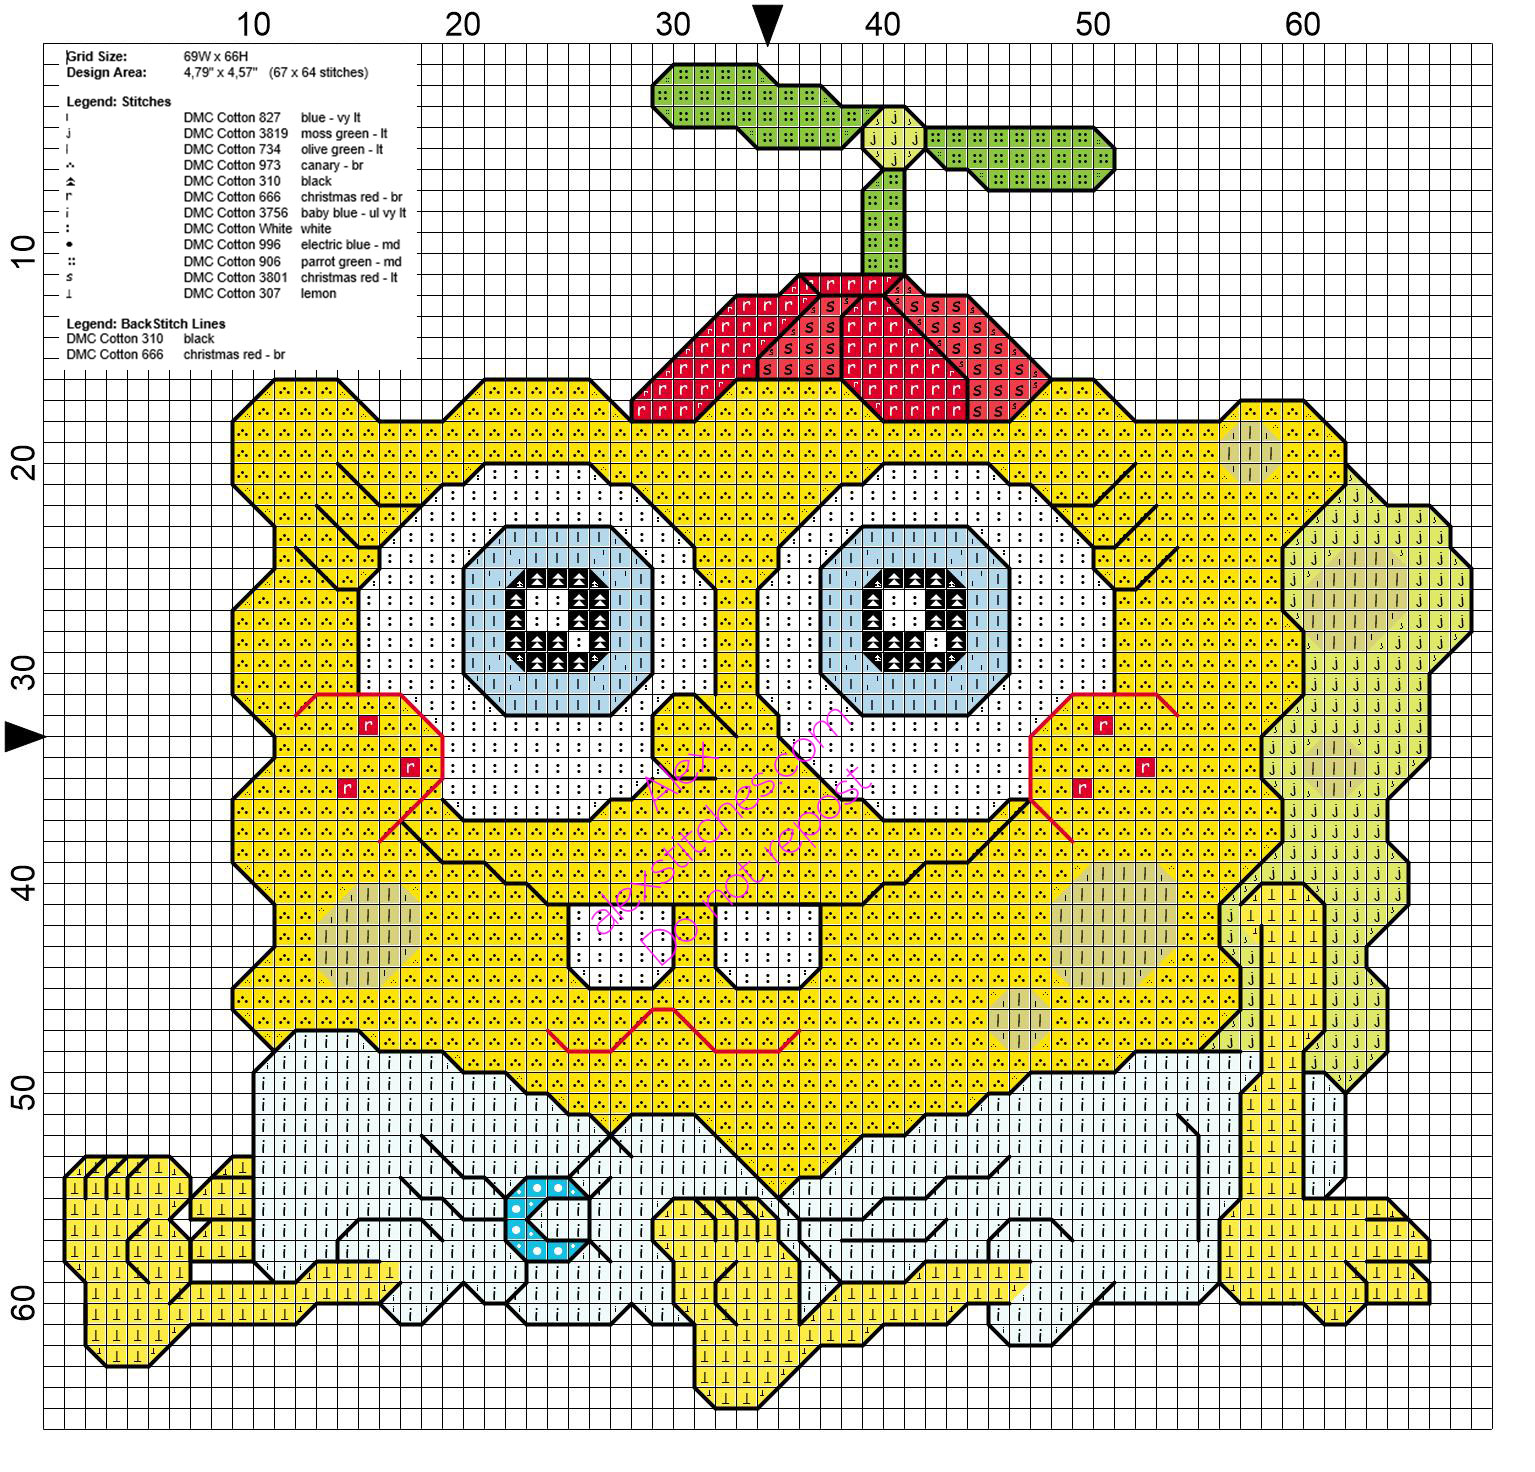 Baby Spongebob free small cross stitch pattern